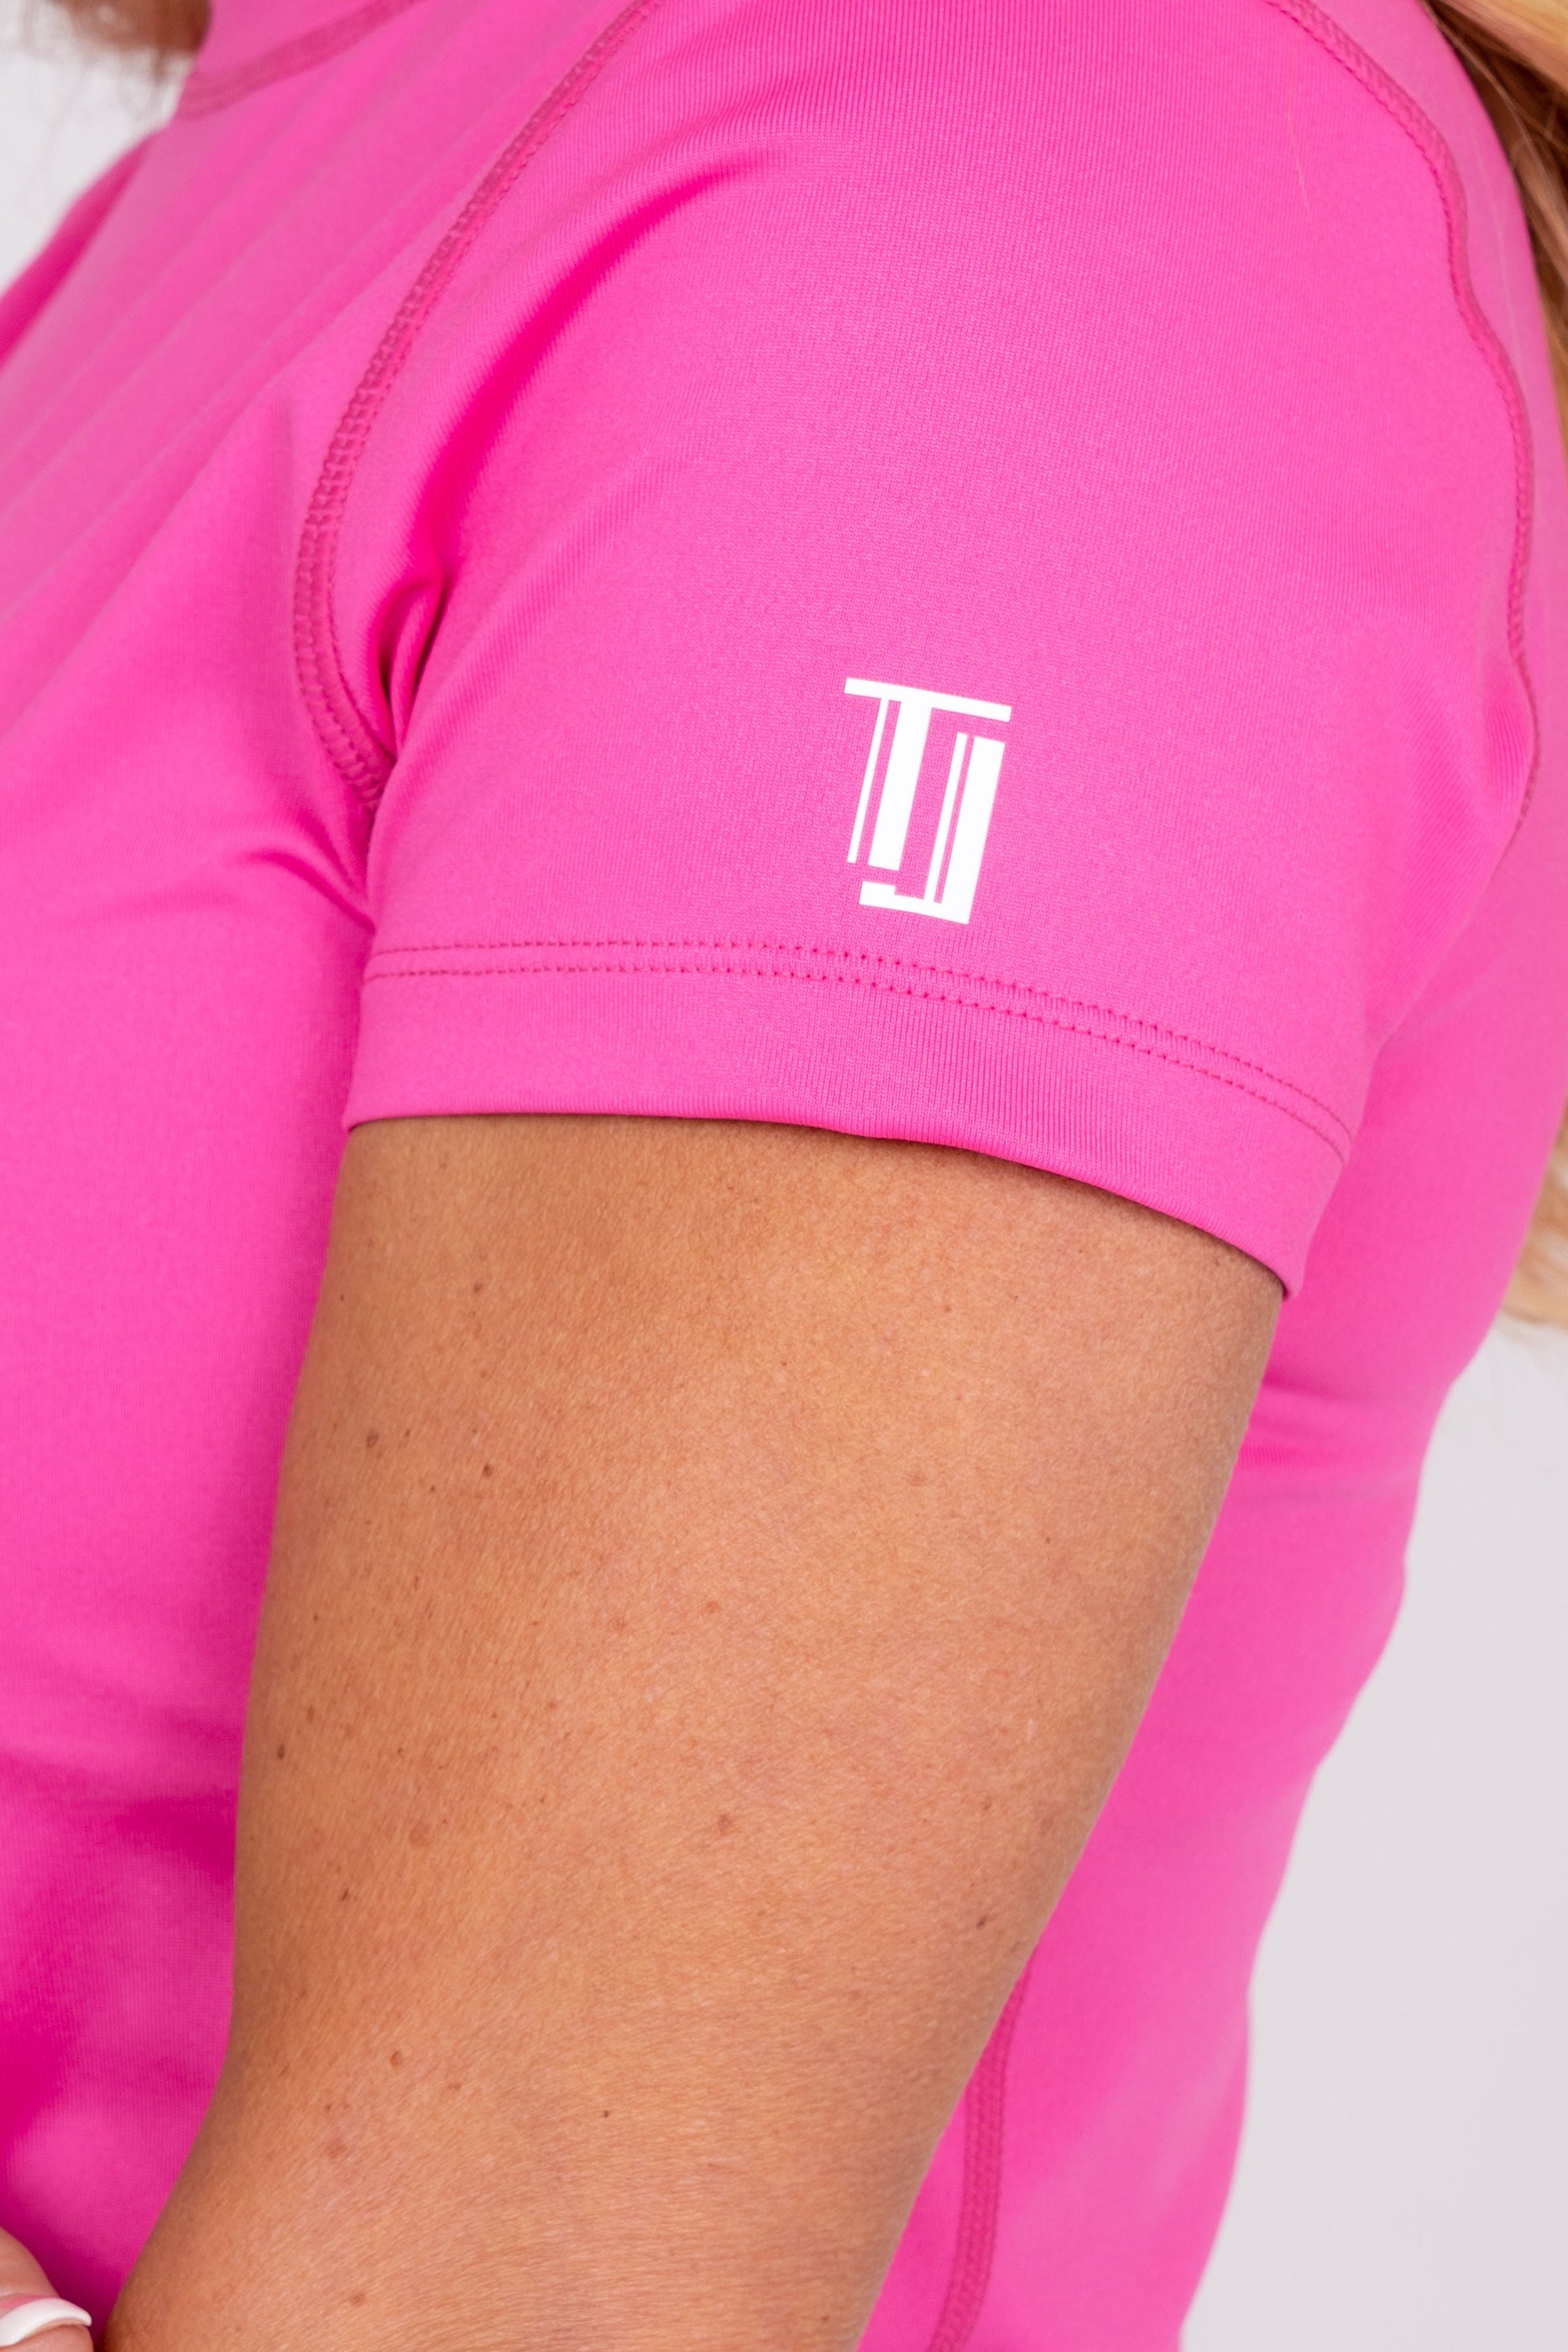 Women's Collarless Athletic Top-Pink Women's Golf Shirt Taylor Jordan Apparel 